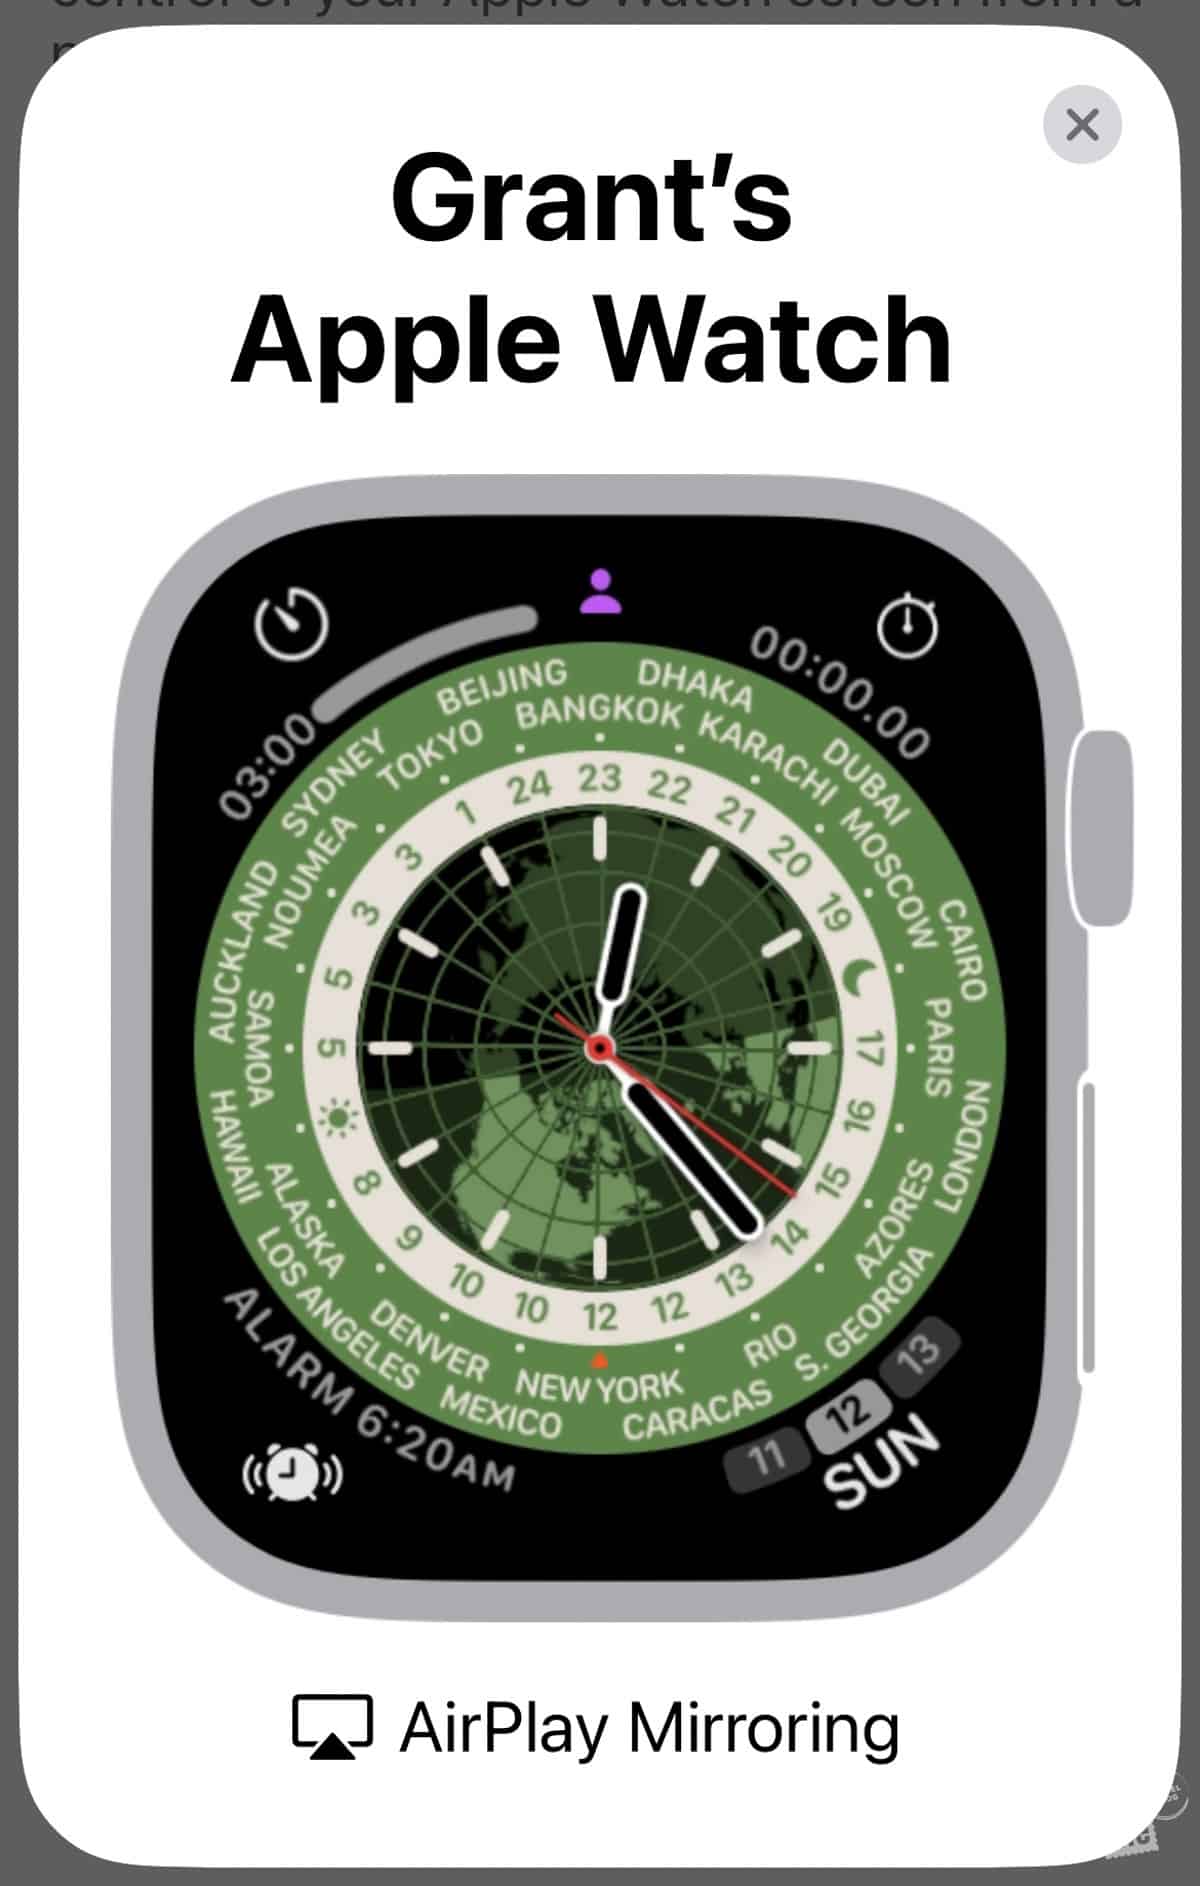 A screenshot of Grant's Apple Watch